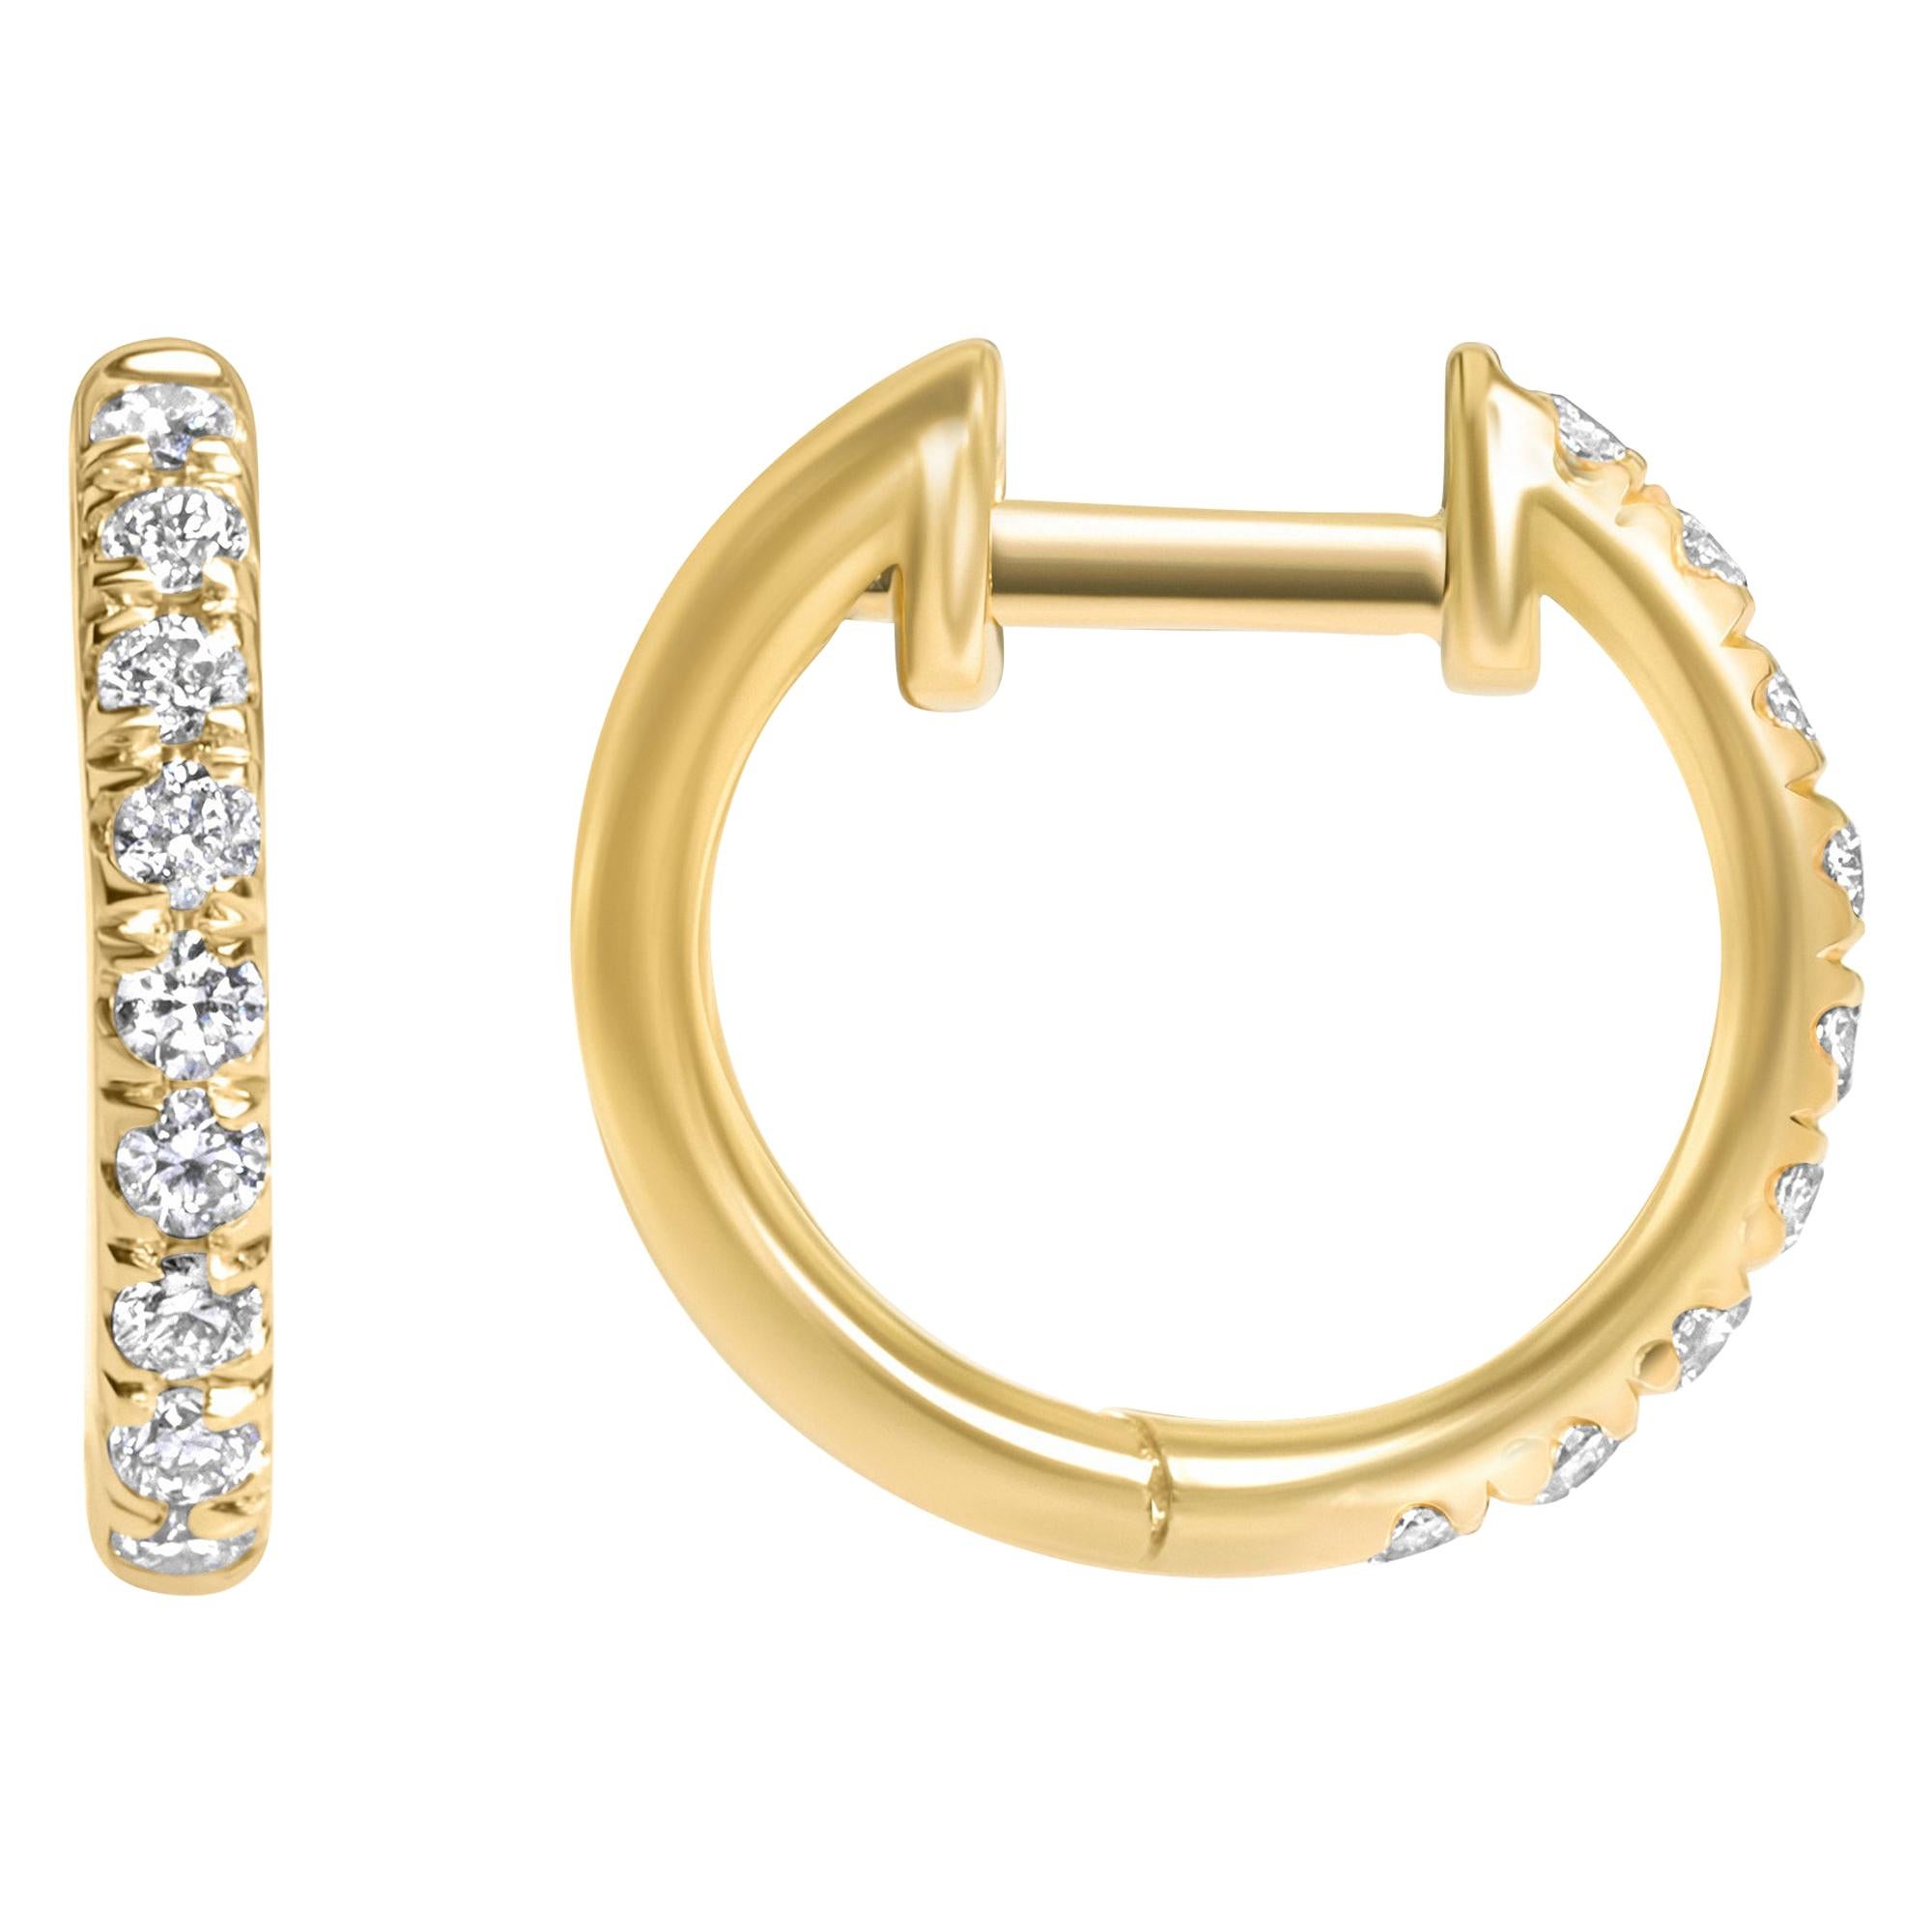 0.27 Carat Lori Diamond Hoop Earrings in 14 Karat Yellow Gold - Shlomit Rogel For Sale